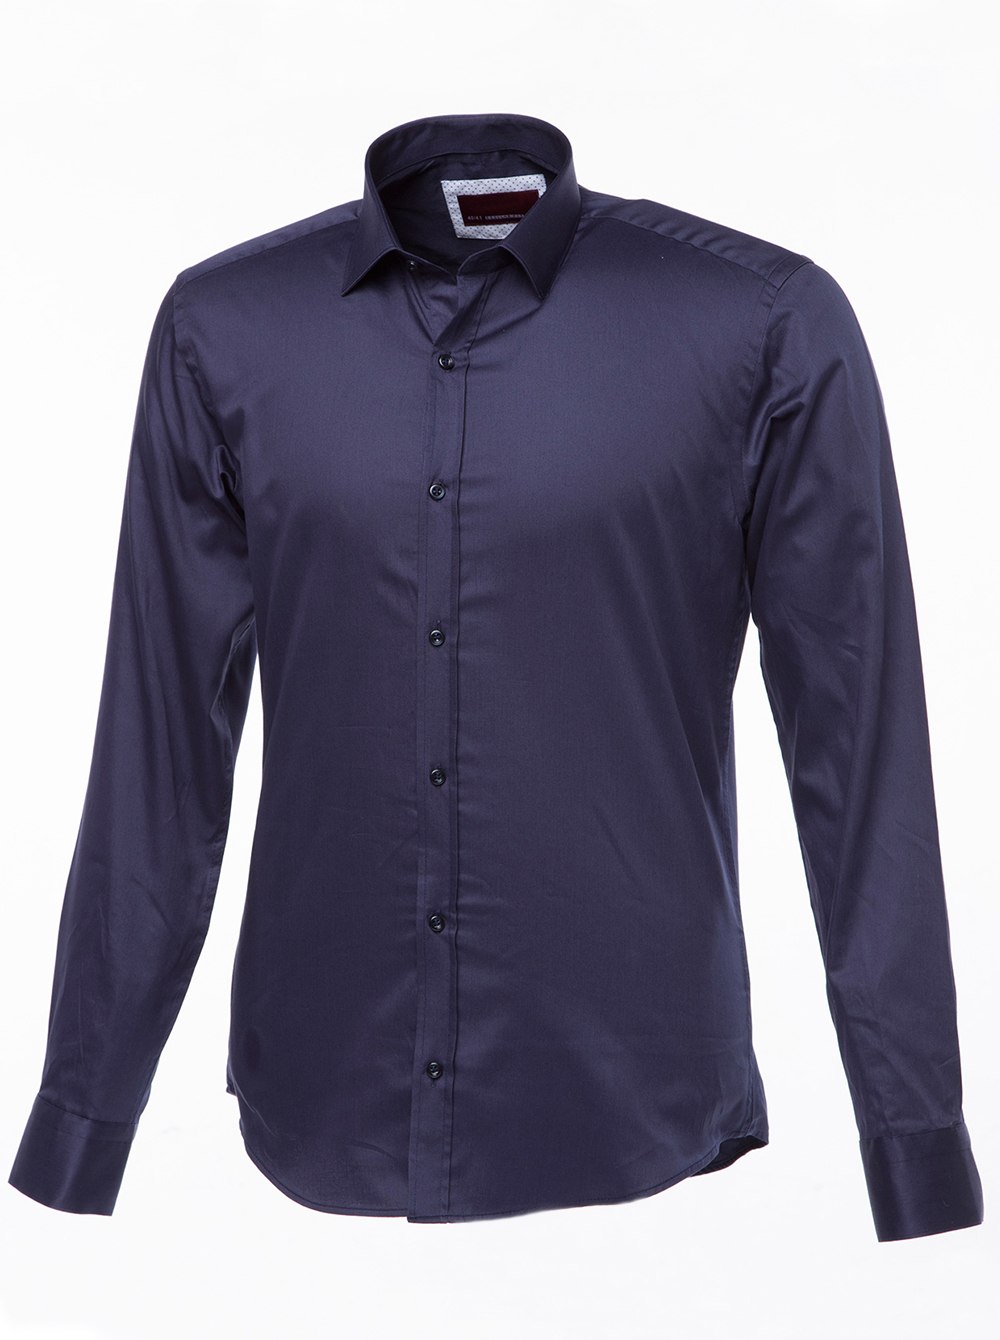 Мужские рубашки производство. Рубашка мужская iv52547. Kilimanjaro сорочка мужская. Mishel Exclusive stile no.315 рубашка мужская. Рубашка w221085410.